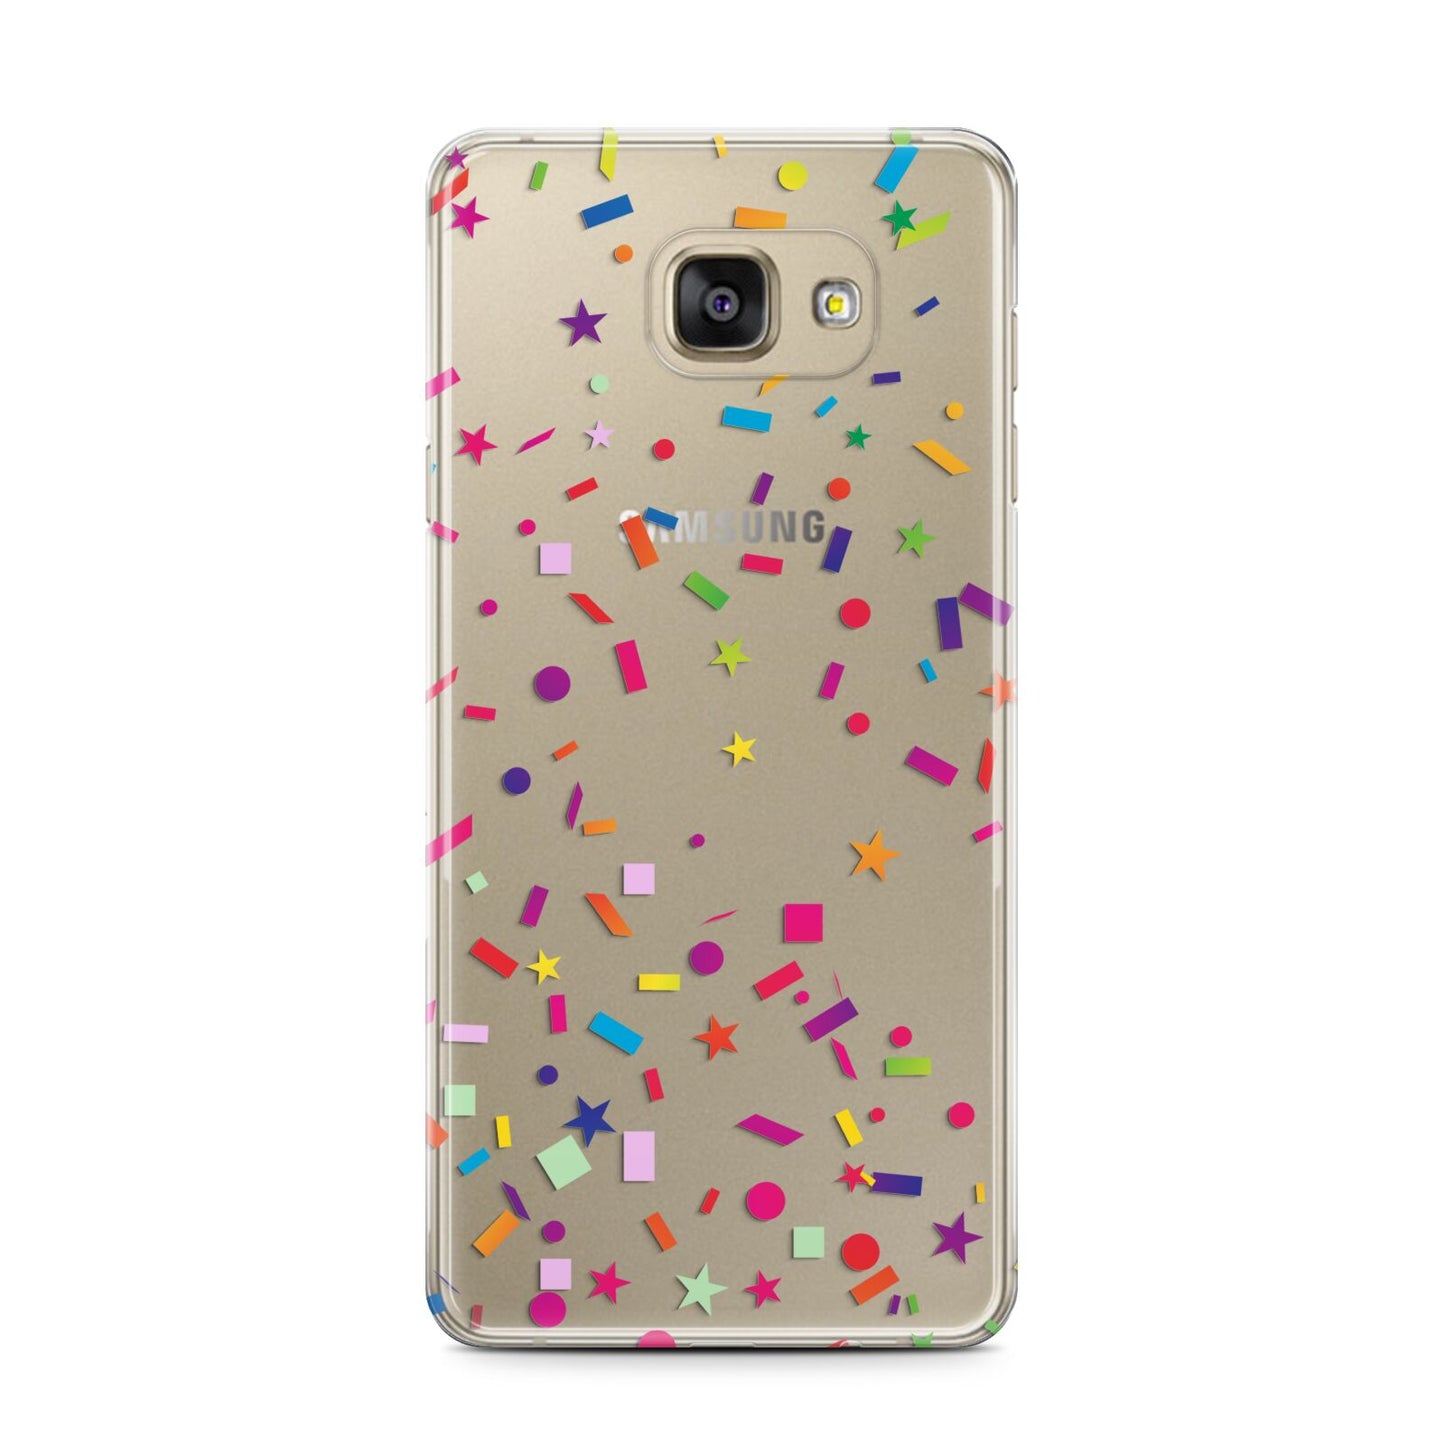 Confetti Samsung Galaxy A7 2016 Case on gold phone